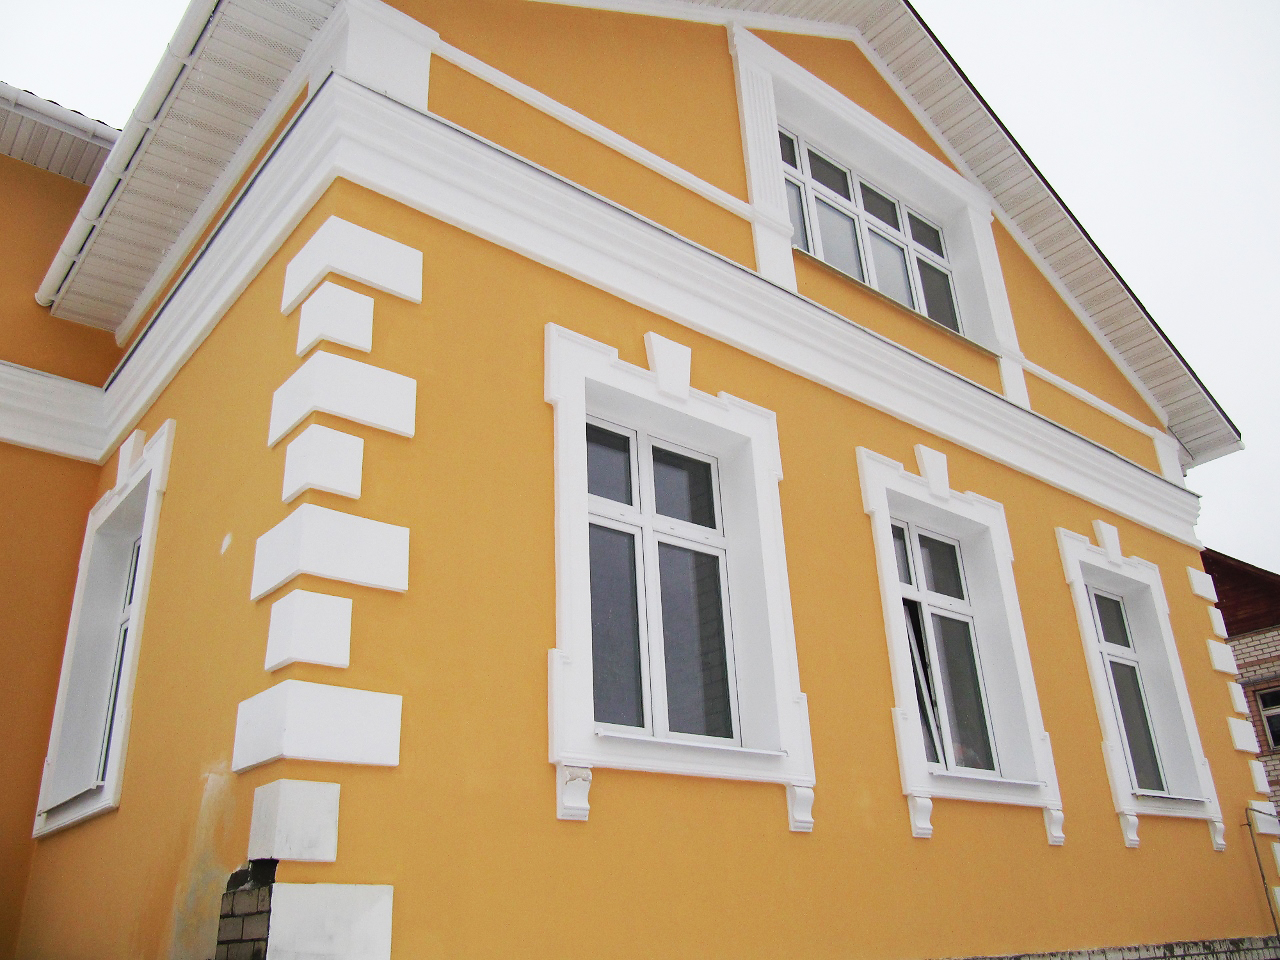 Наружная покраска домов. Краска для фасадов домов. Покраска фасадов домов. Крашенный фасад дома. Покрасить фасад дома.